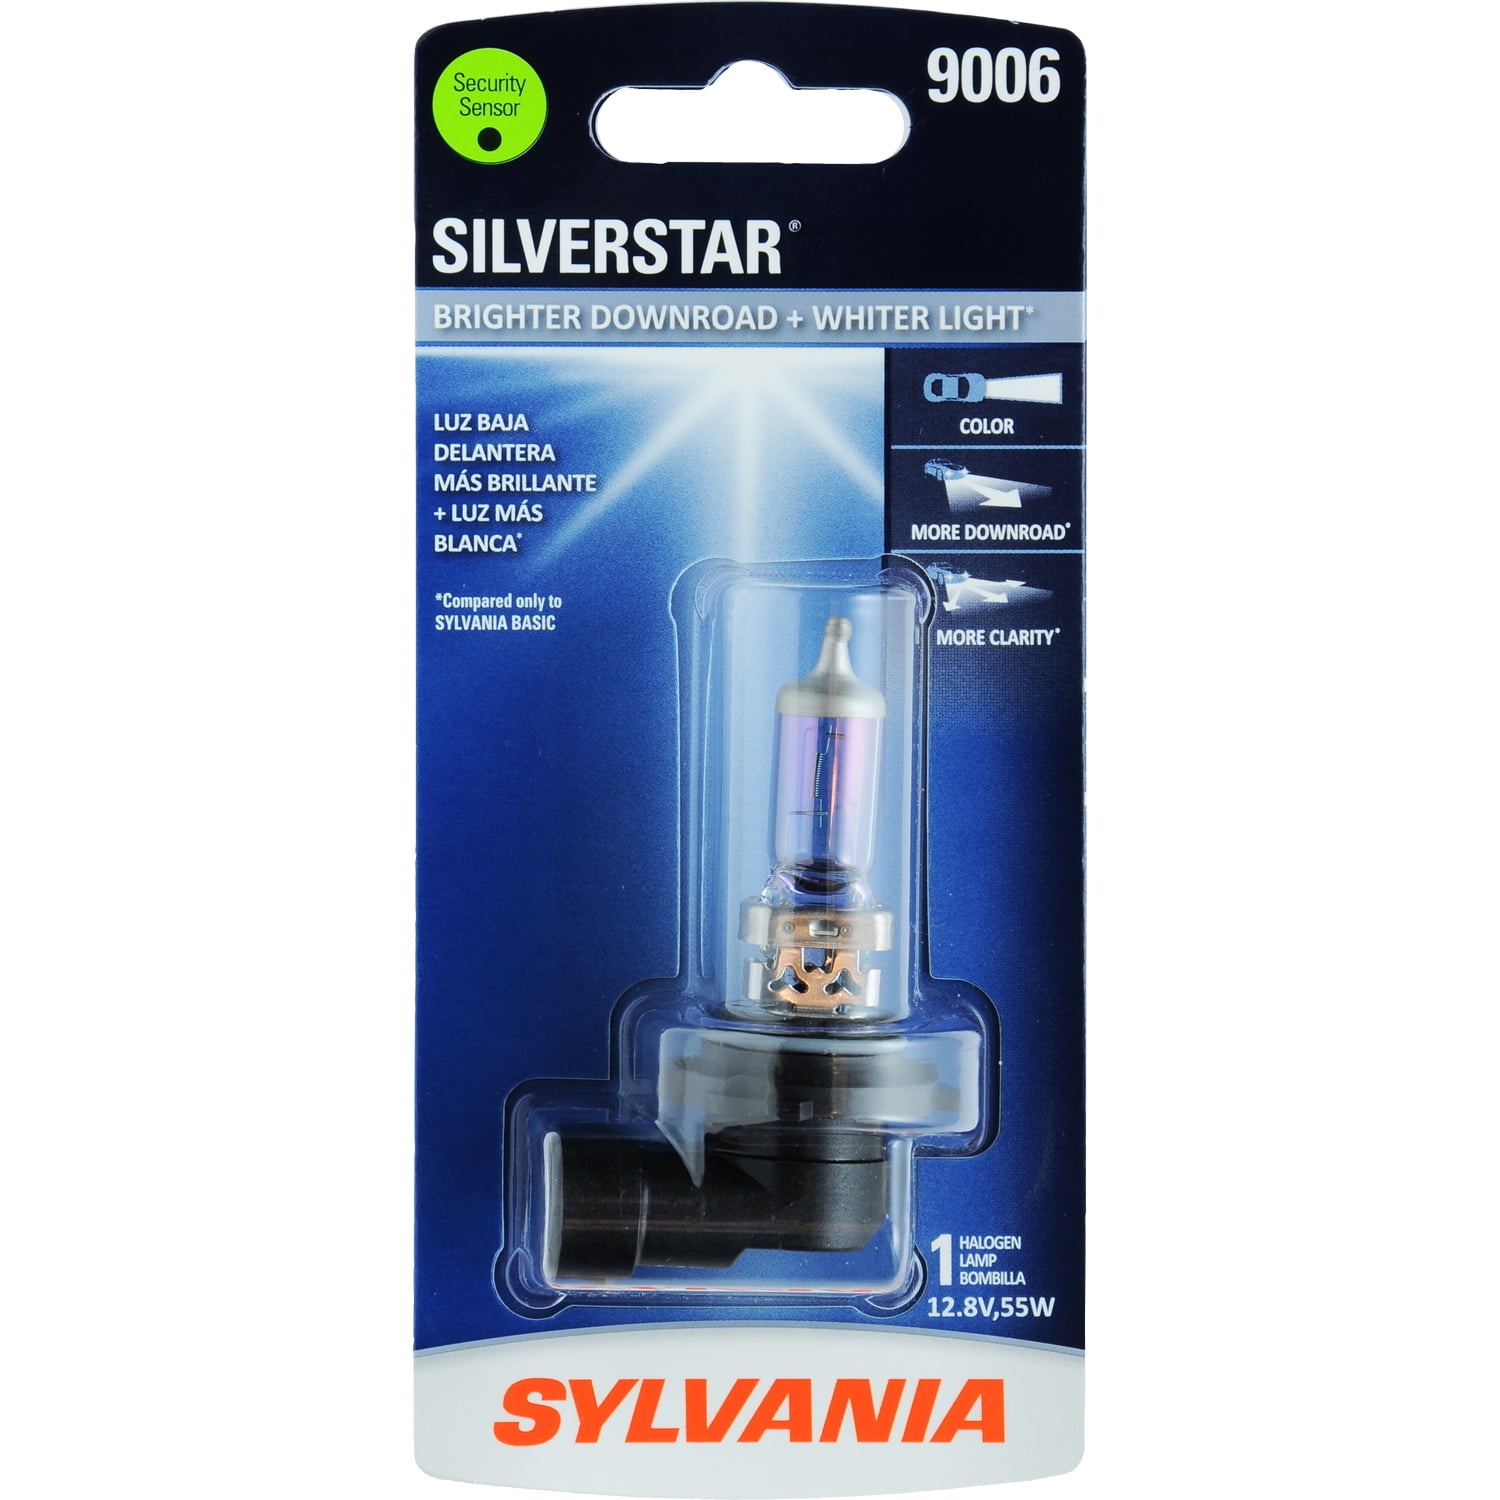 Sylvania 9006 SilverStar Auto Halogen Headlight Bulb, Pack of 1.